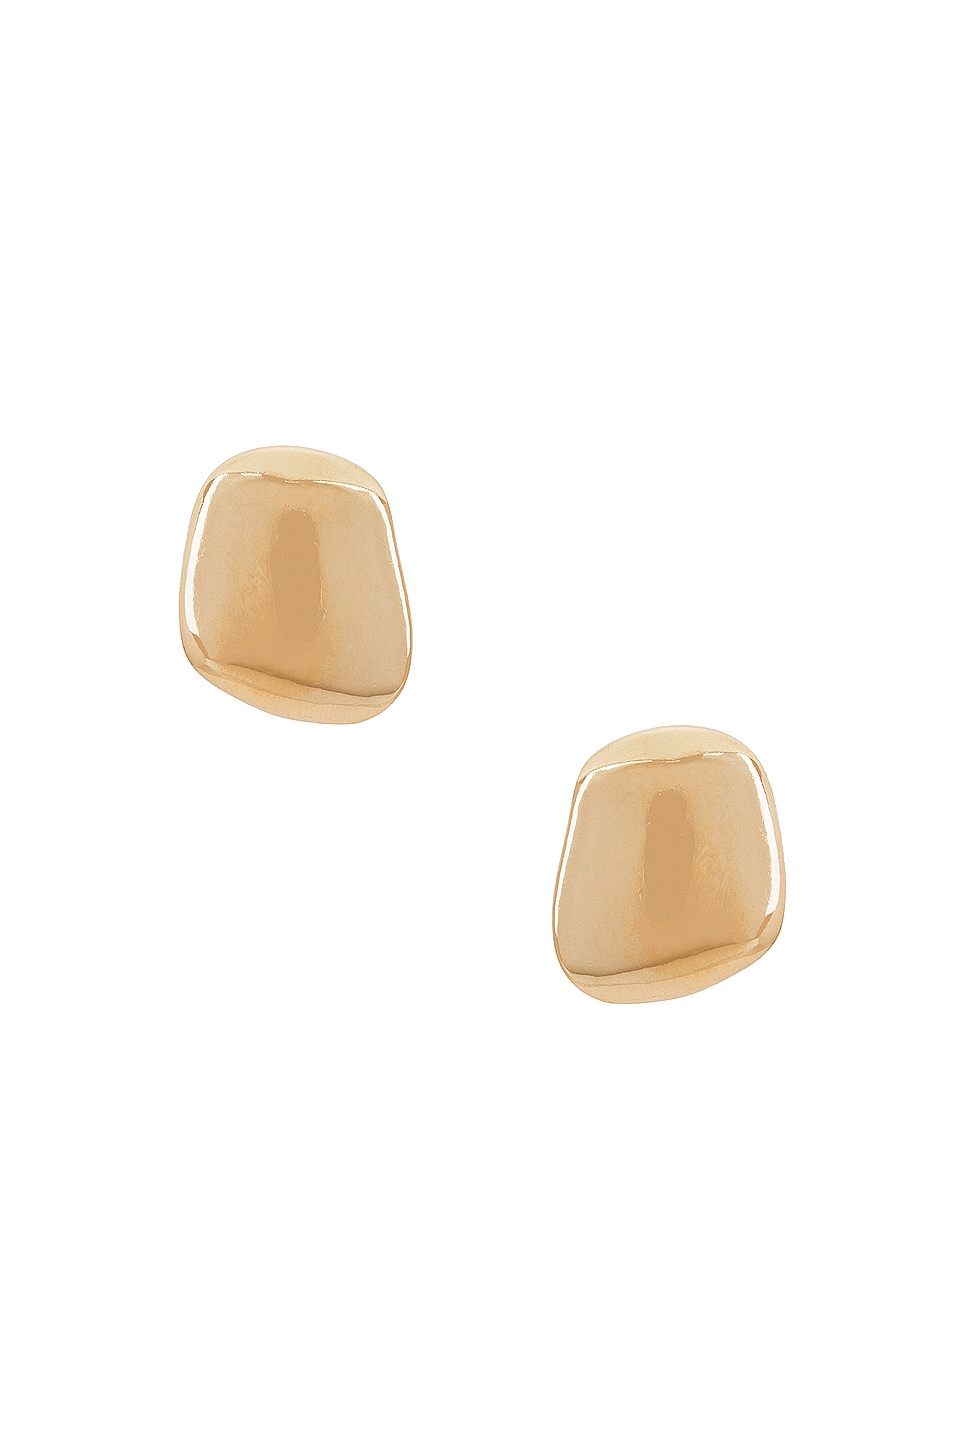 Image 1 of Jordan Road Jewelry Organic Rectangle Earrings in 18k Gold Filled